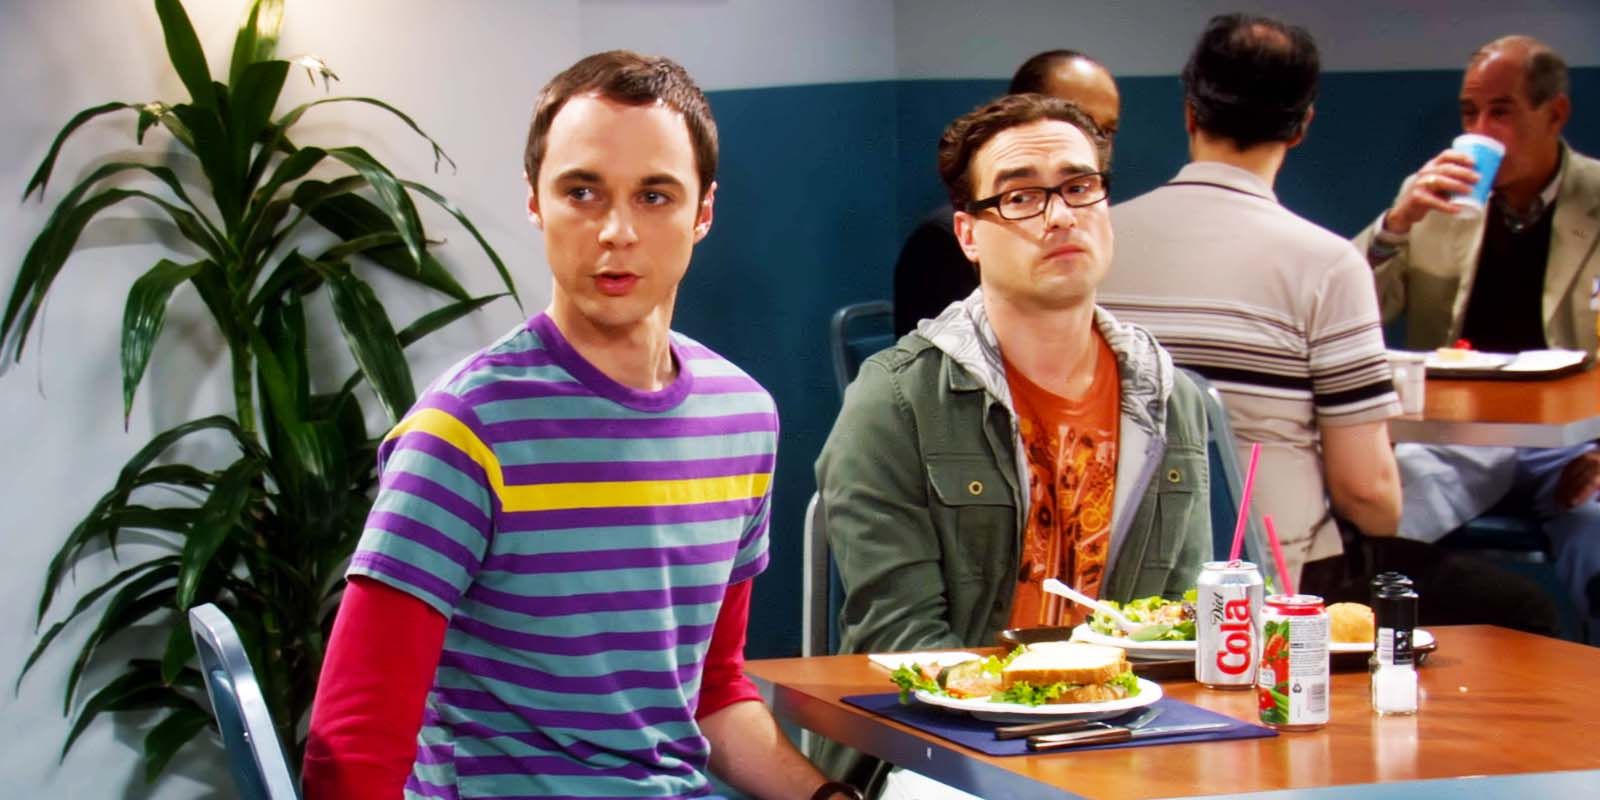 Jim Parsons as Sheldon Cooper and Johnny Galecki as Leonard Hofstadter in The Big Bang Theory season 1